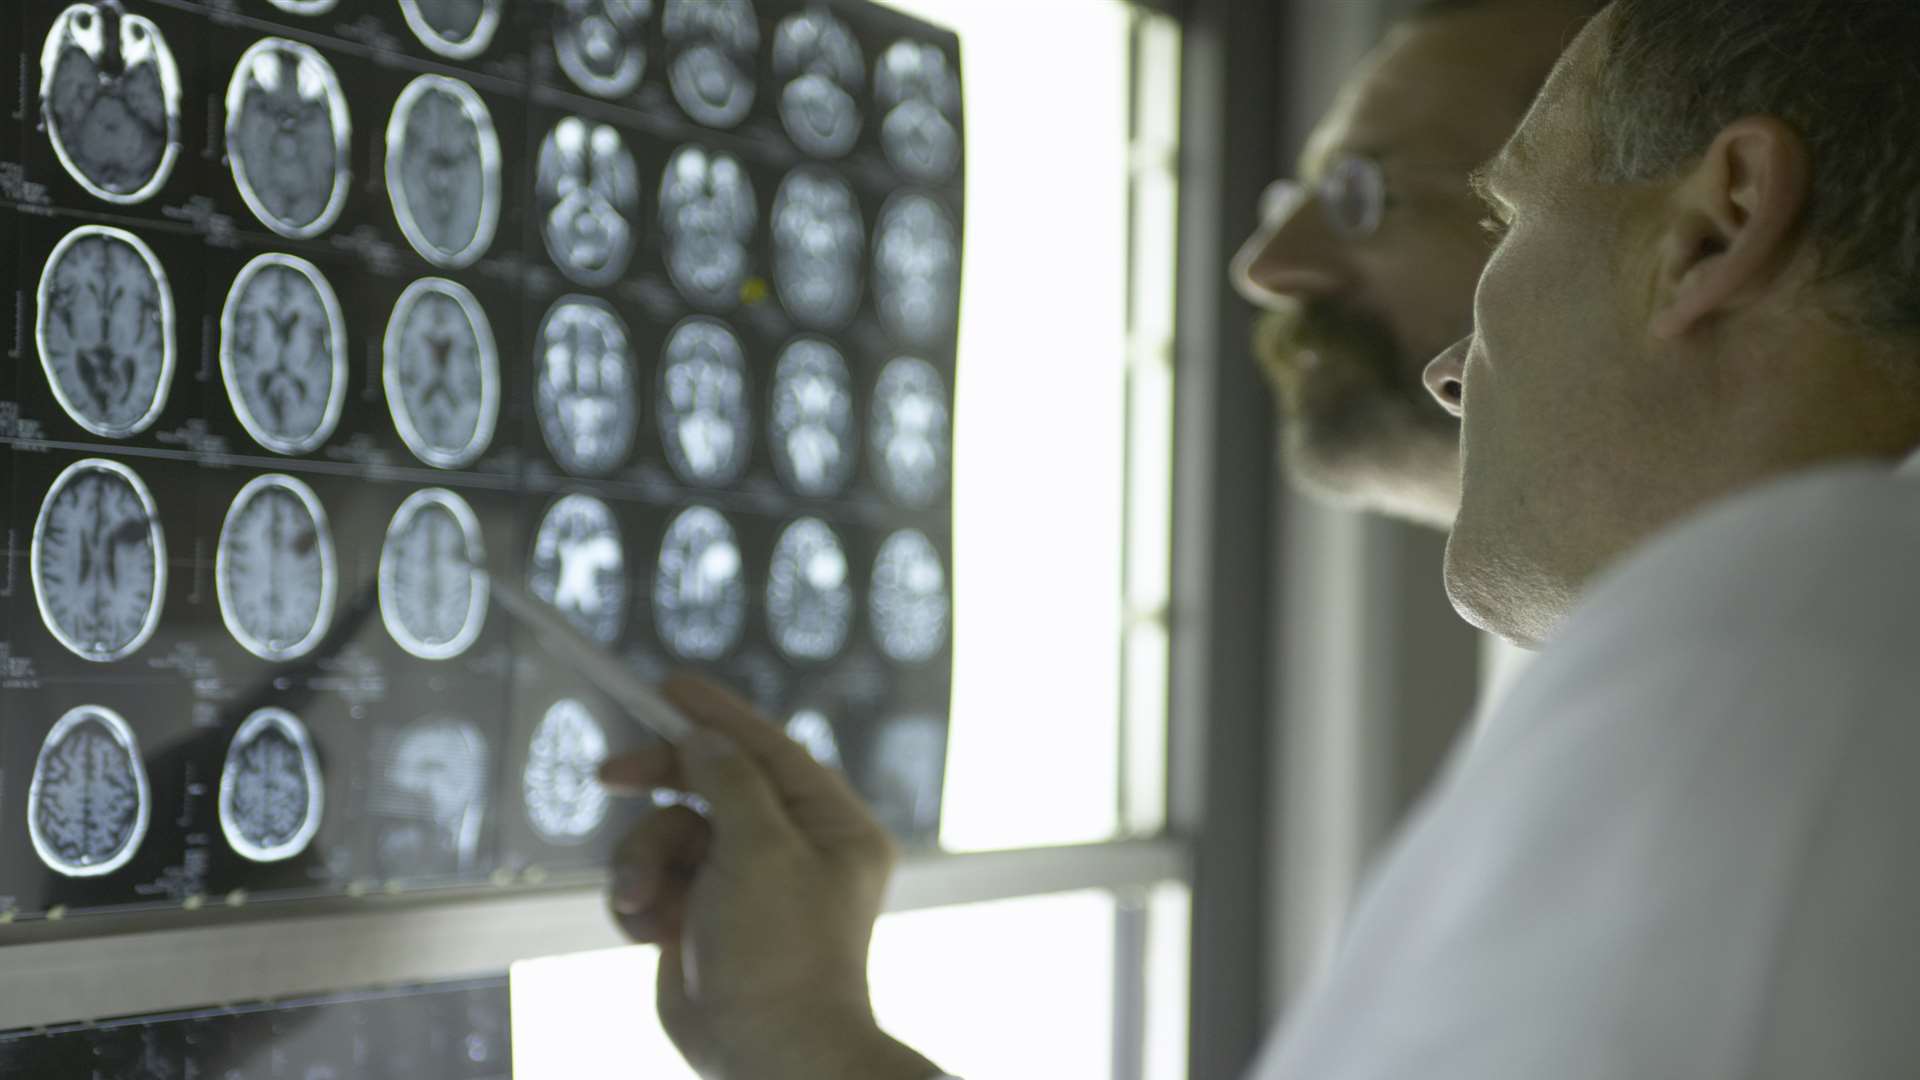 Doctors examine x-rays. File picture: Jochen Sand